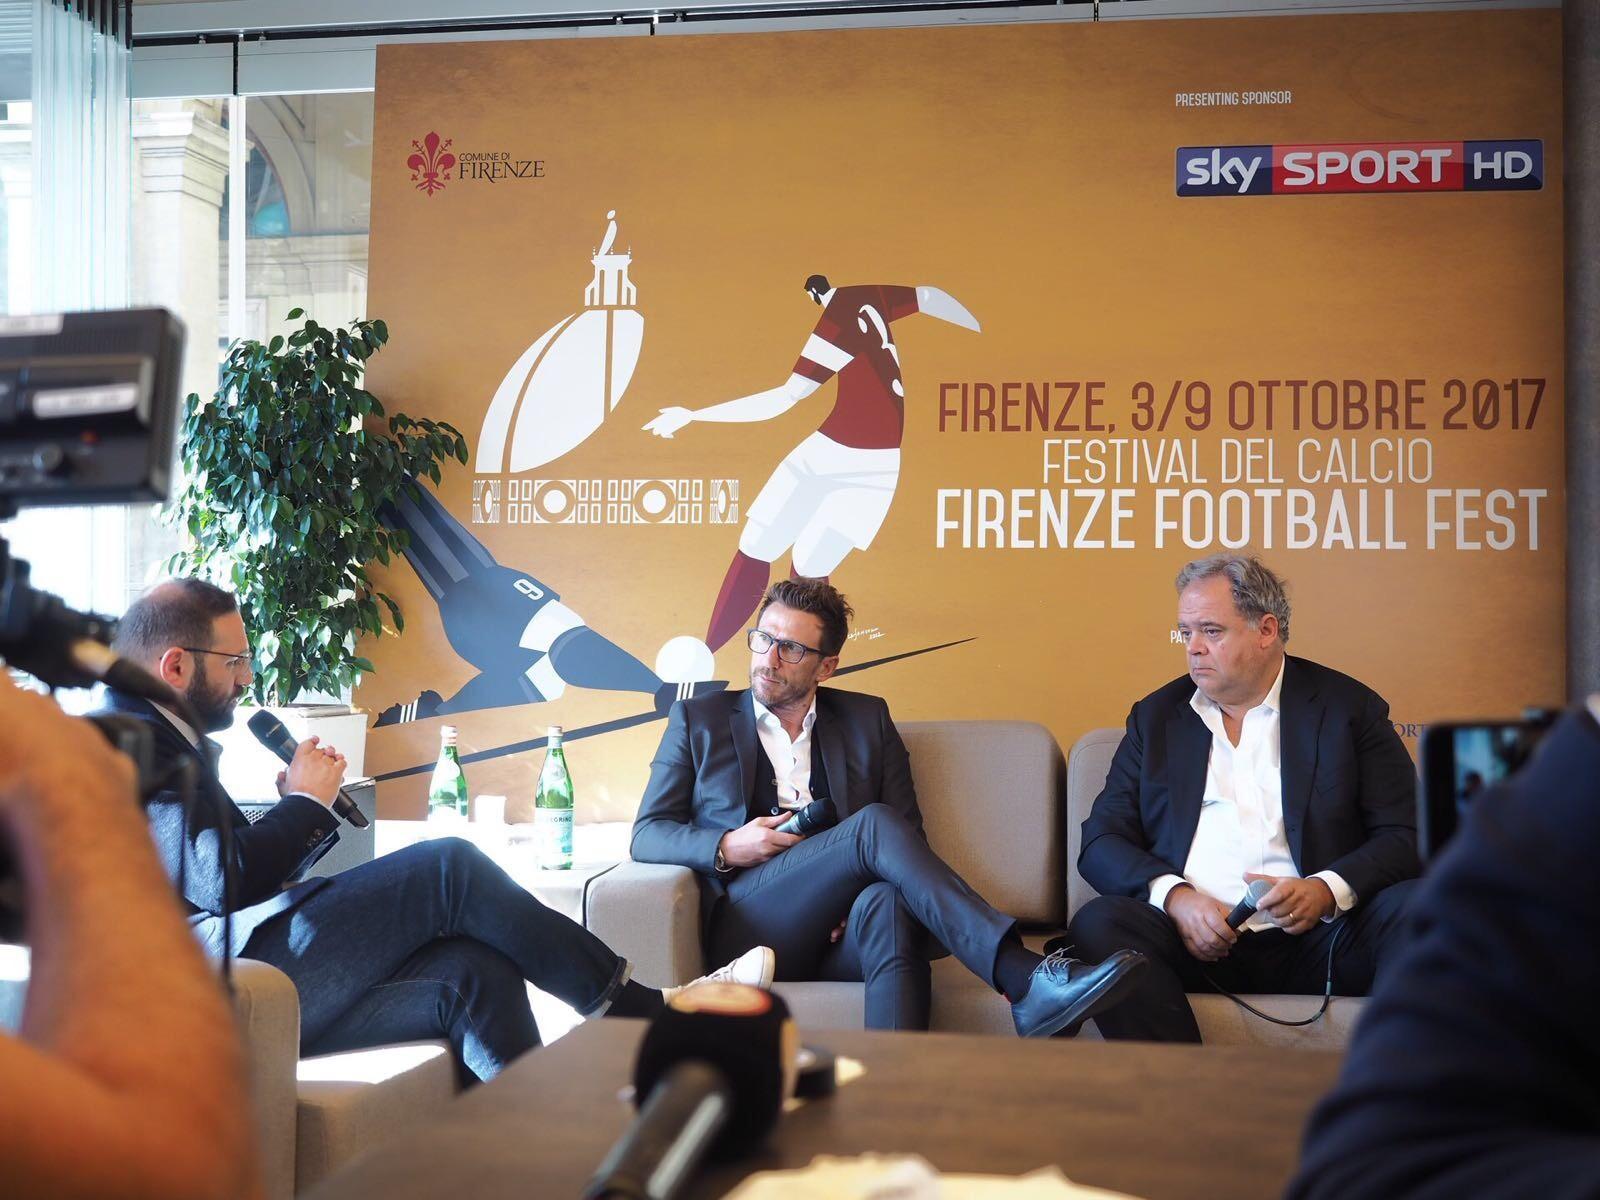 Firenze Football Fest / Marco Giugliarelli